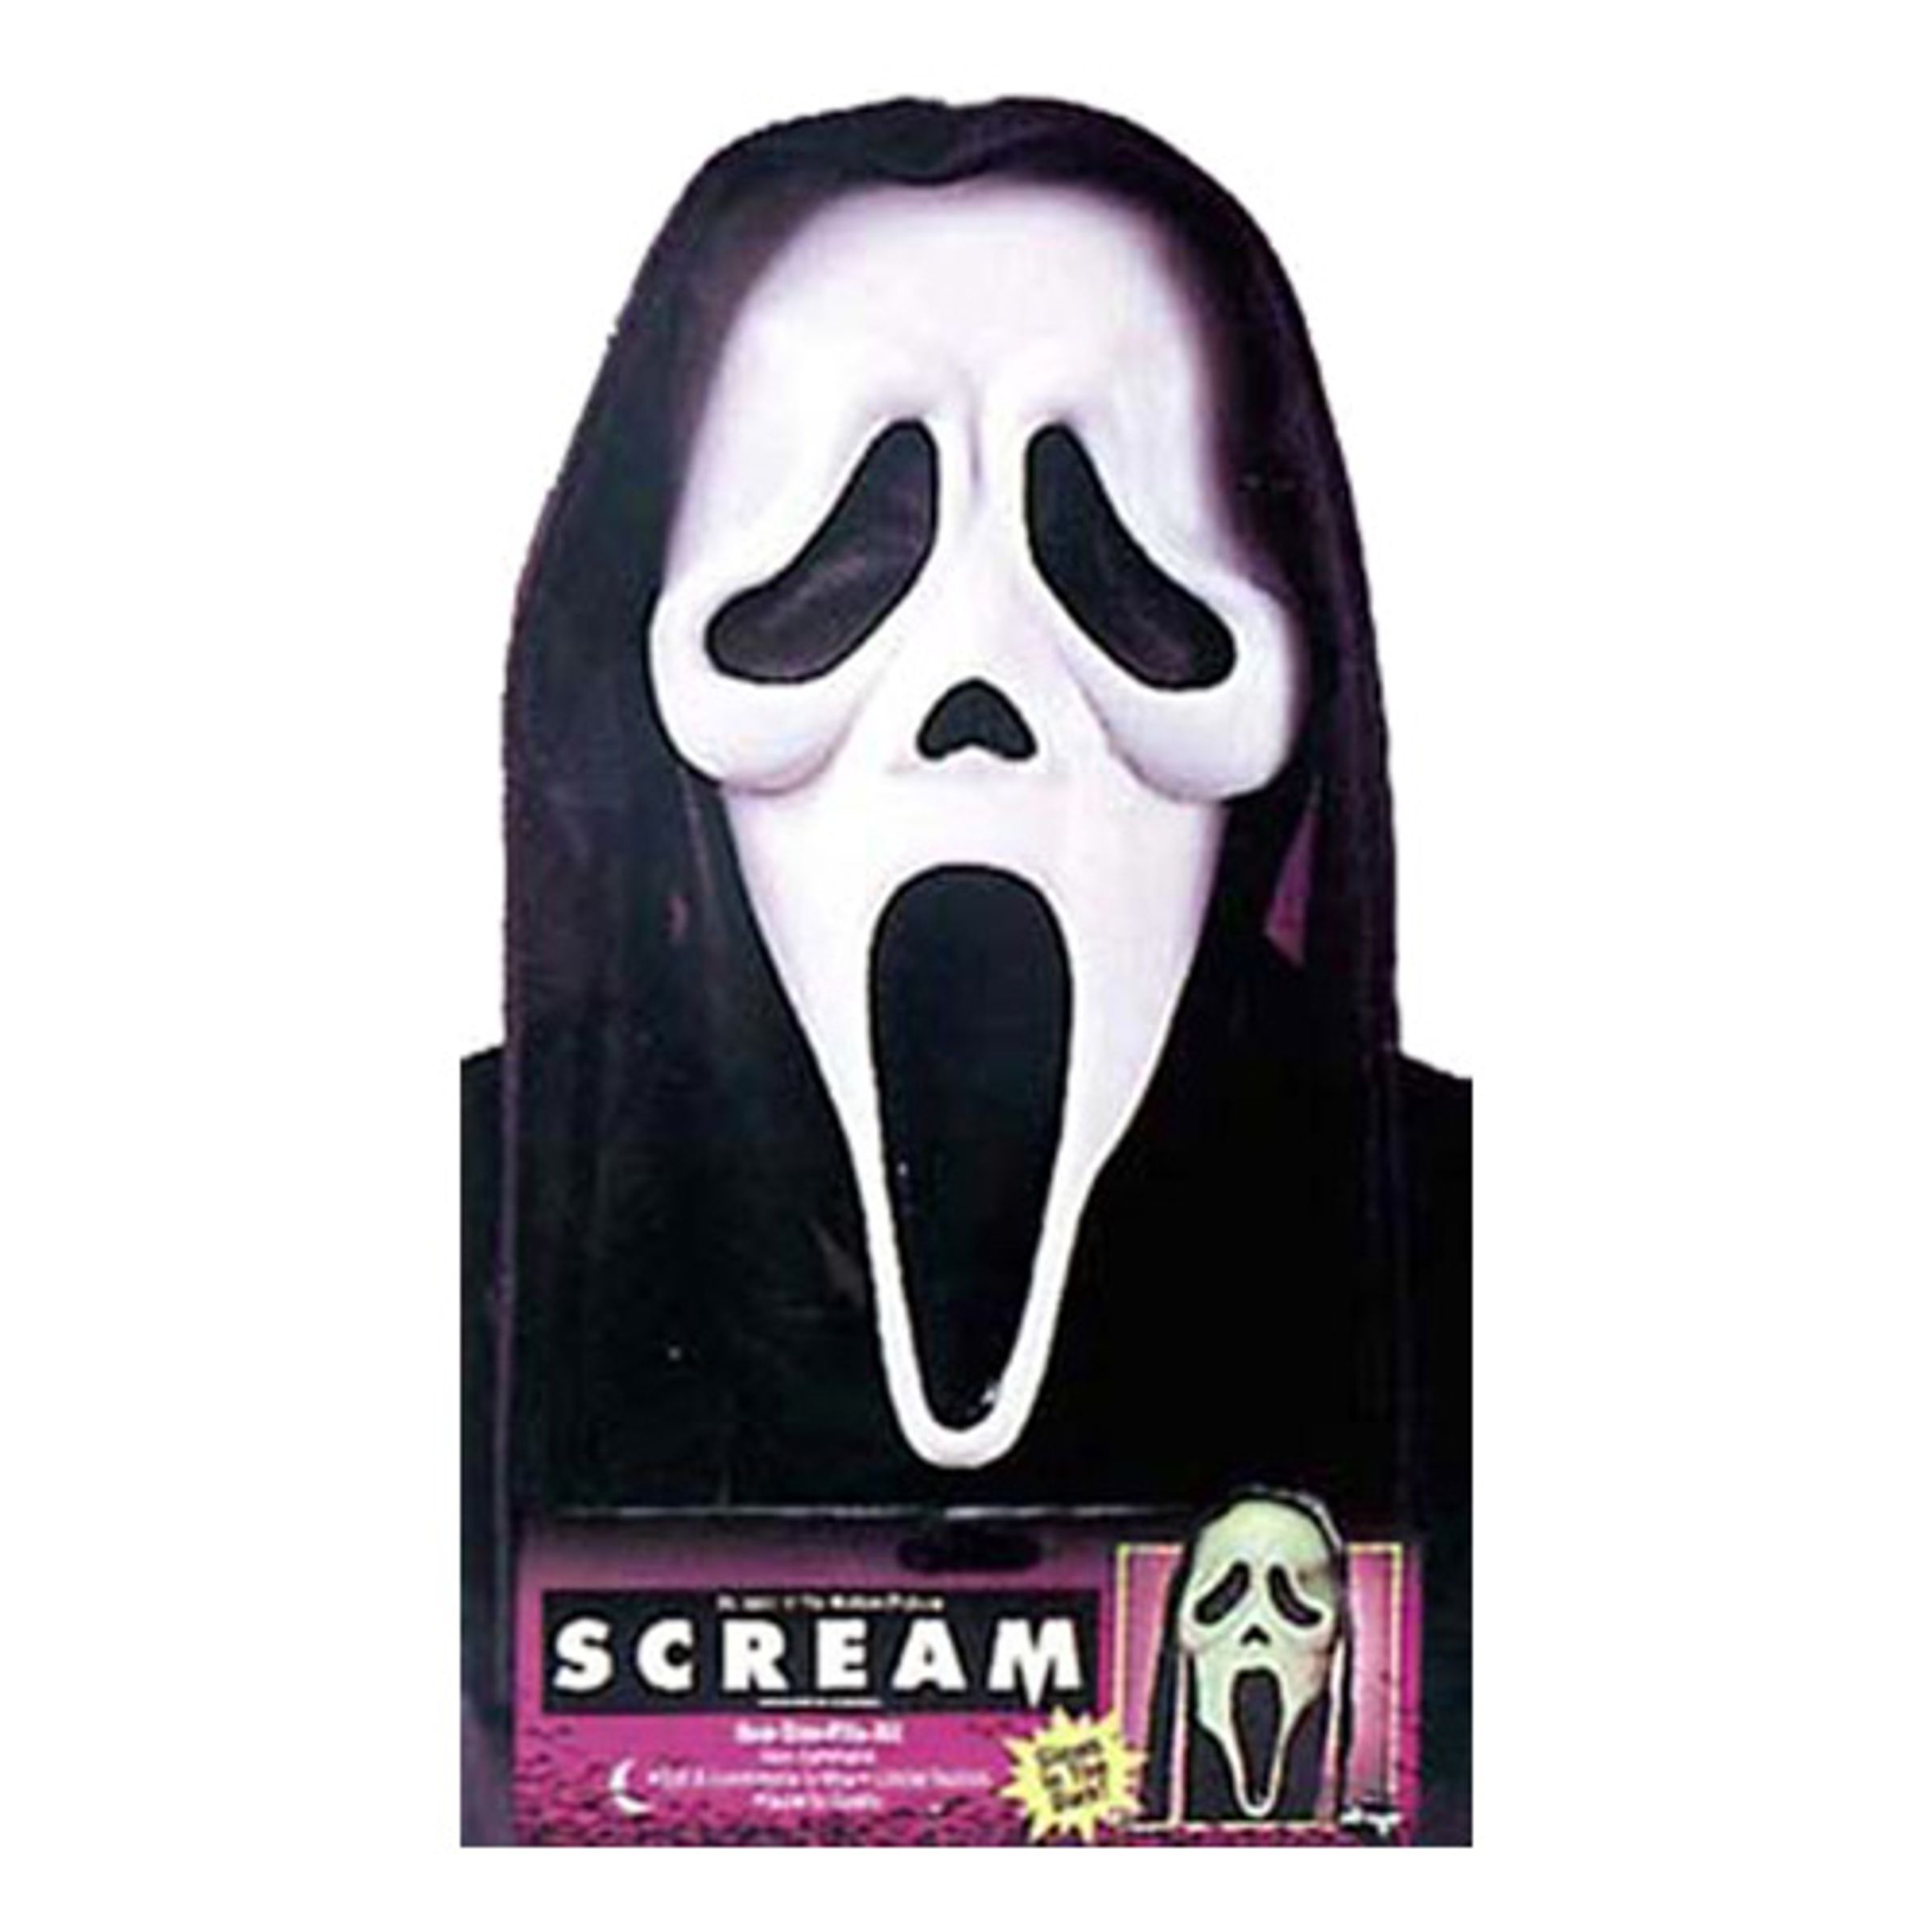 Scream Mask - One size